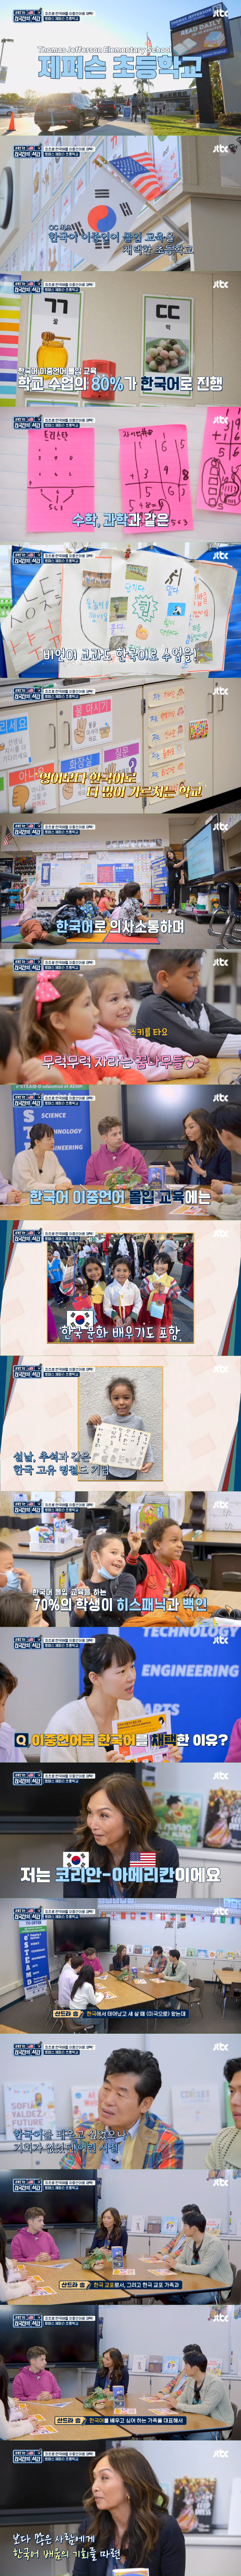 OC 최초, 한국어를 이중언어로 채택! 「토마스 제퍼슨 초등학교」 _ 한국인의 식판 7회 _ JTBC 230506 방송 0-2 screenshot-down.png